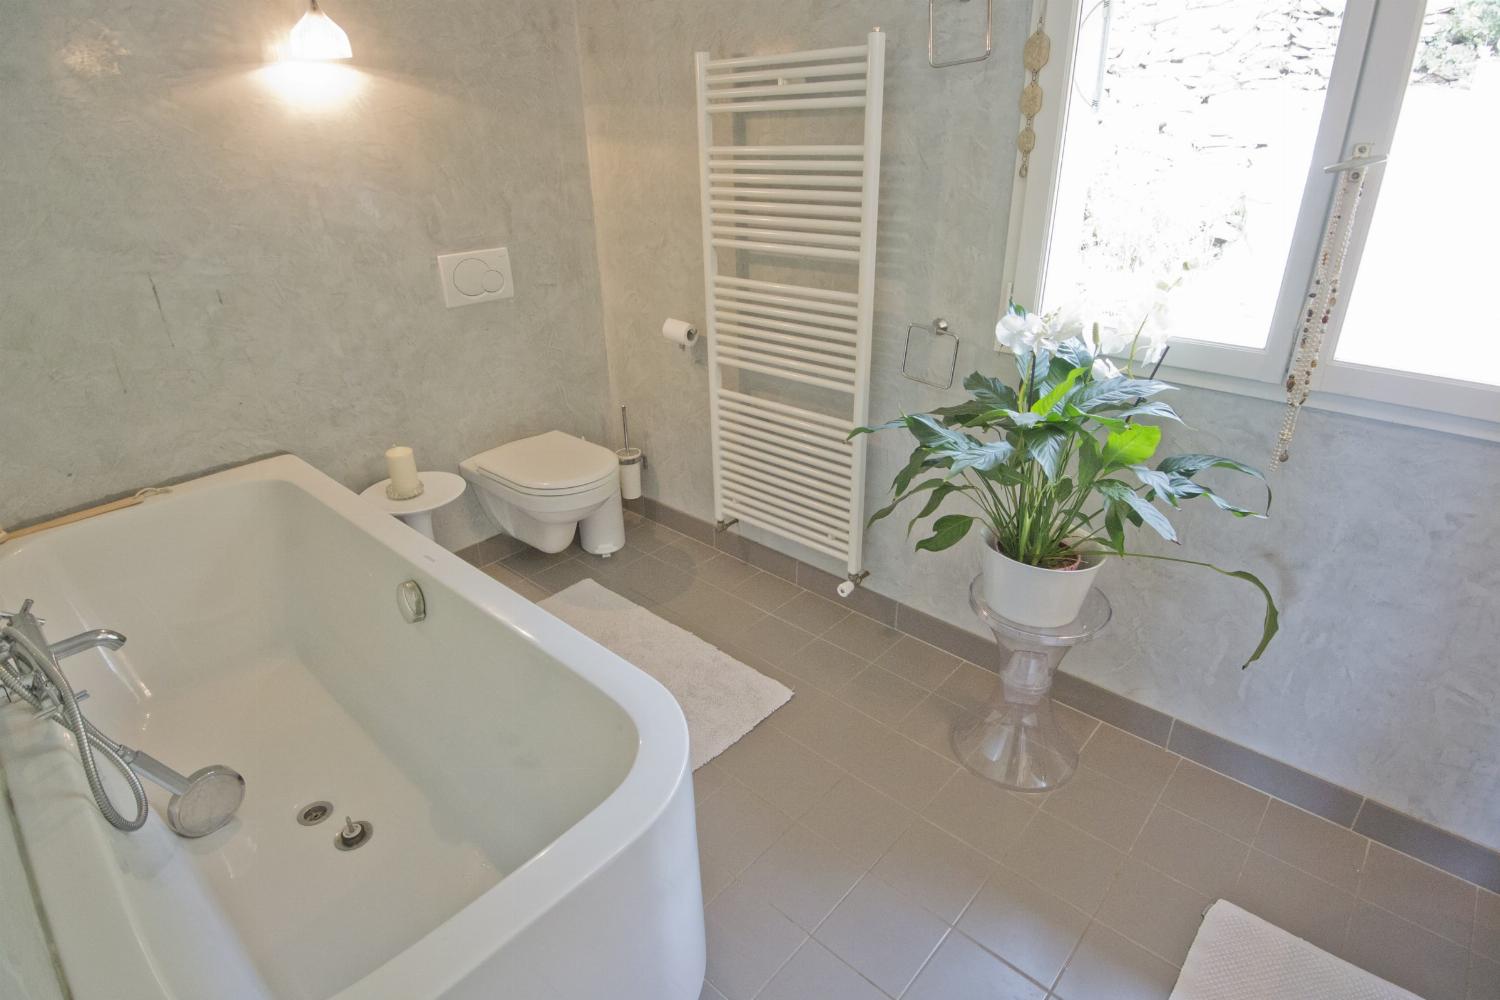 Bathroom | Rental villa in South of France